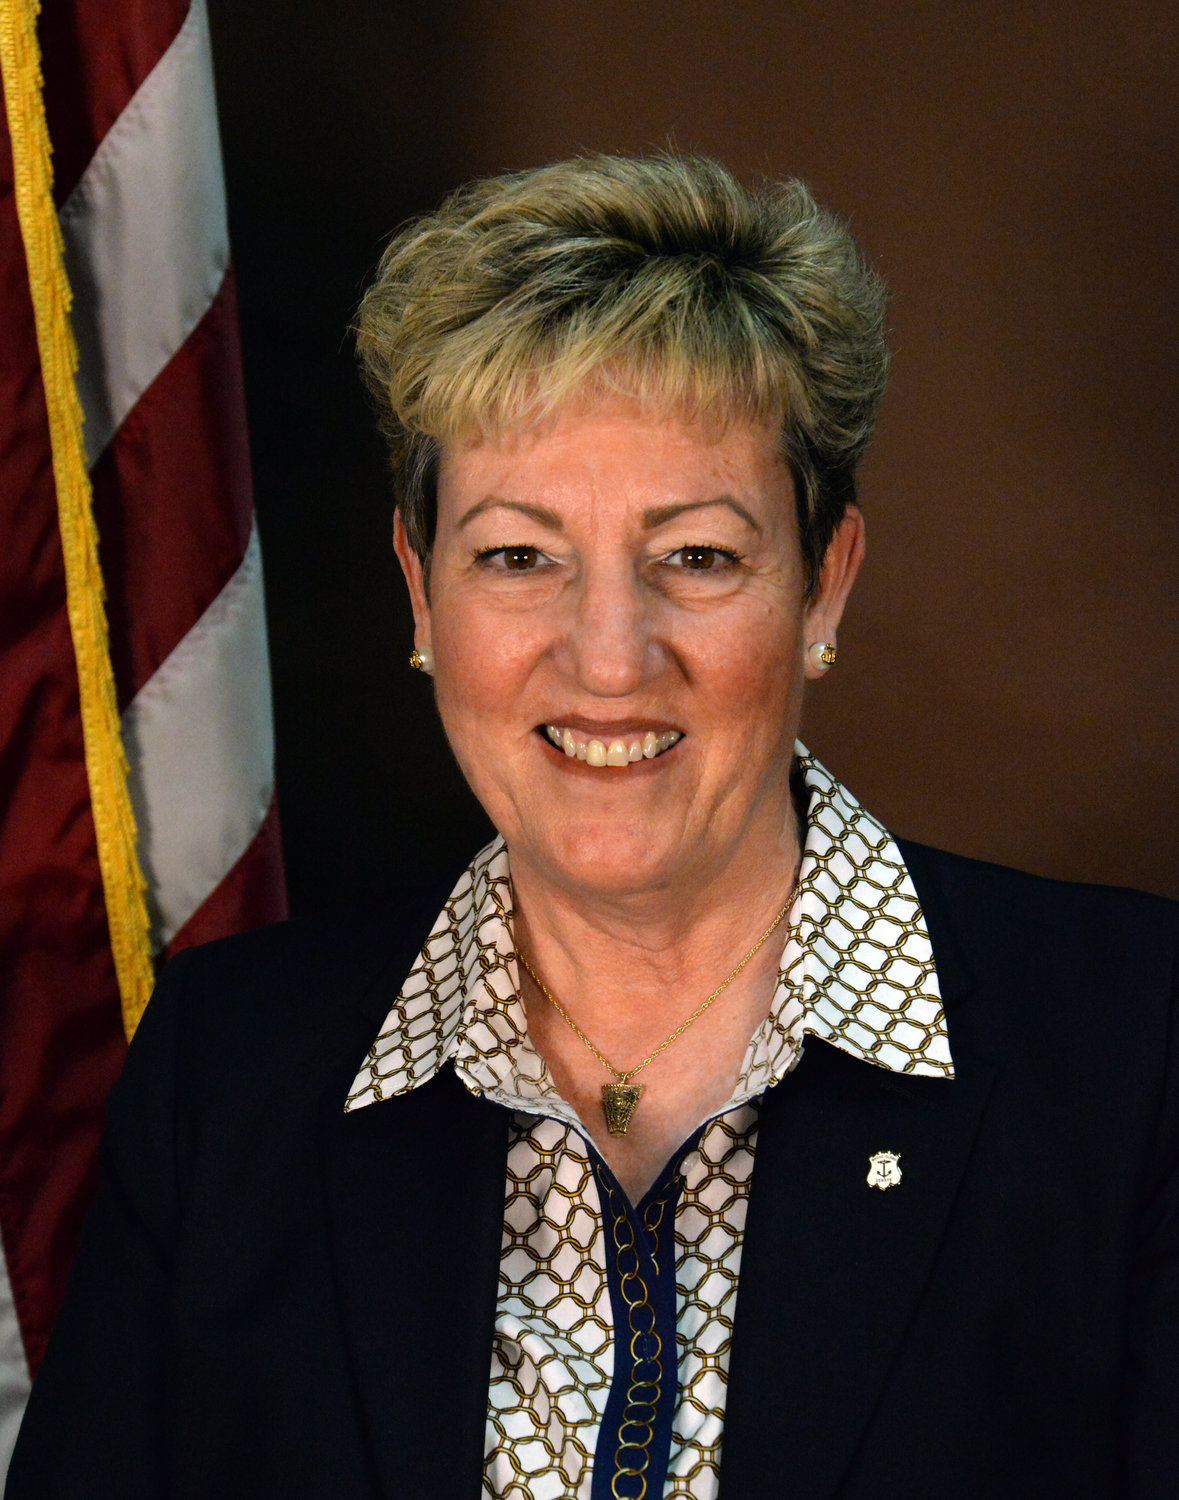 Sen. Cynthia A. Coyne (D. Dist. 32, Barrington, Bristol, East Providence) will not be seeking a fifth term in the Rhode Island State Senate